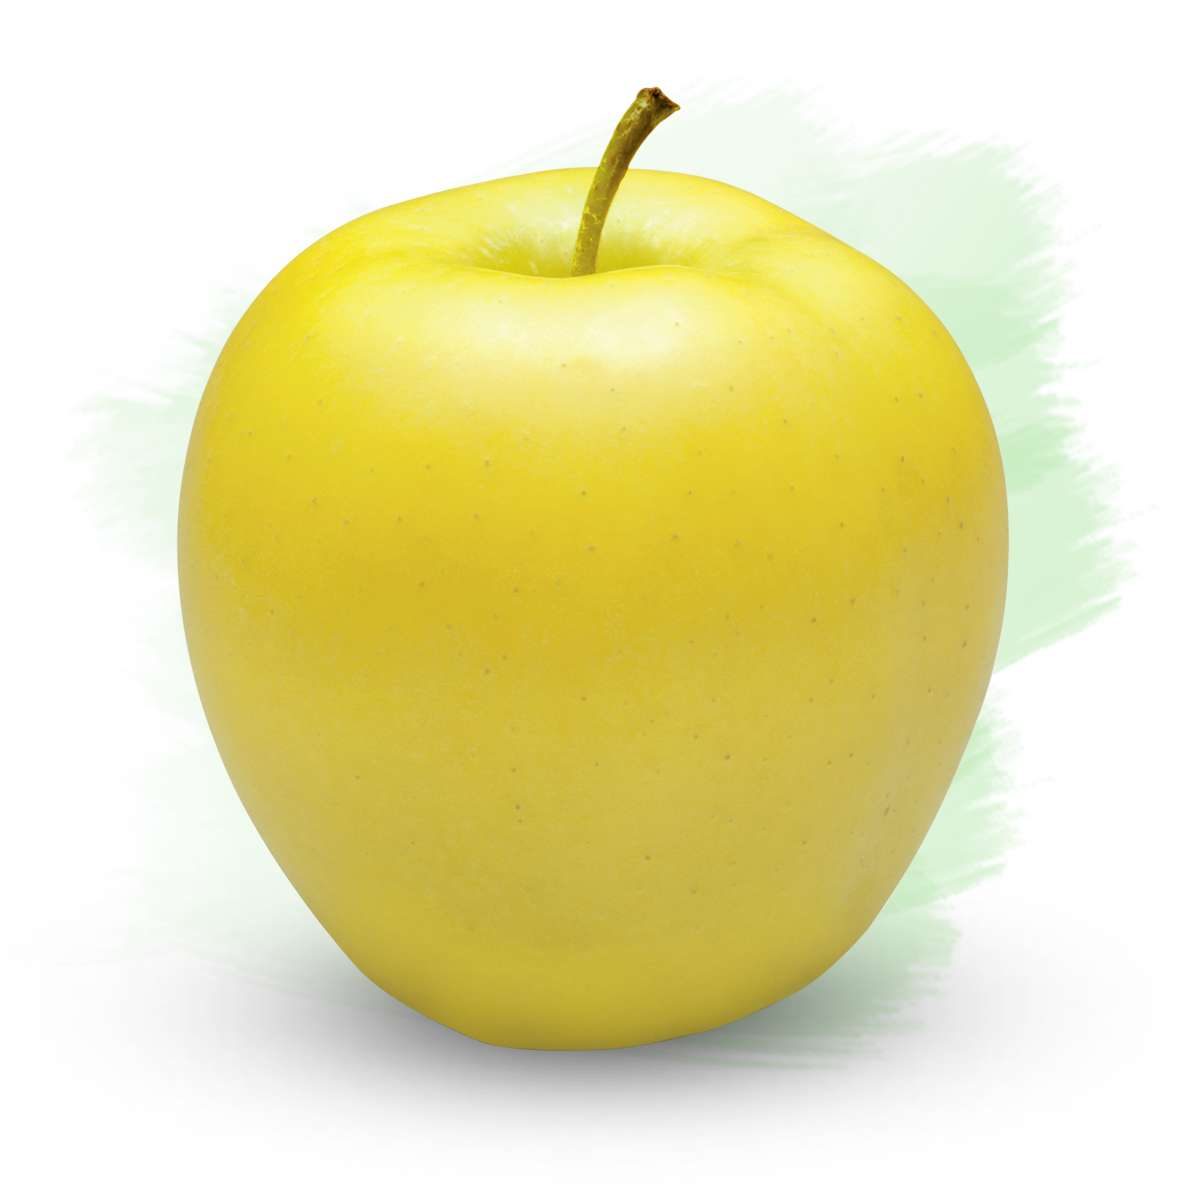 Почему яблоко желтое. Яблоки Голден Делишес. Яблоки желтые. Желтое яблоко на белом фоне. Желтое яблоко на прозрачном фоне.